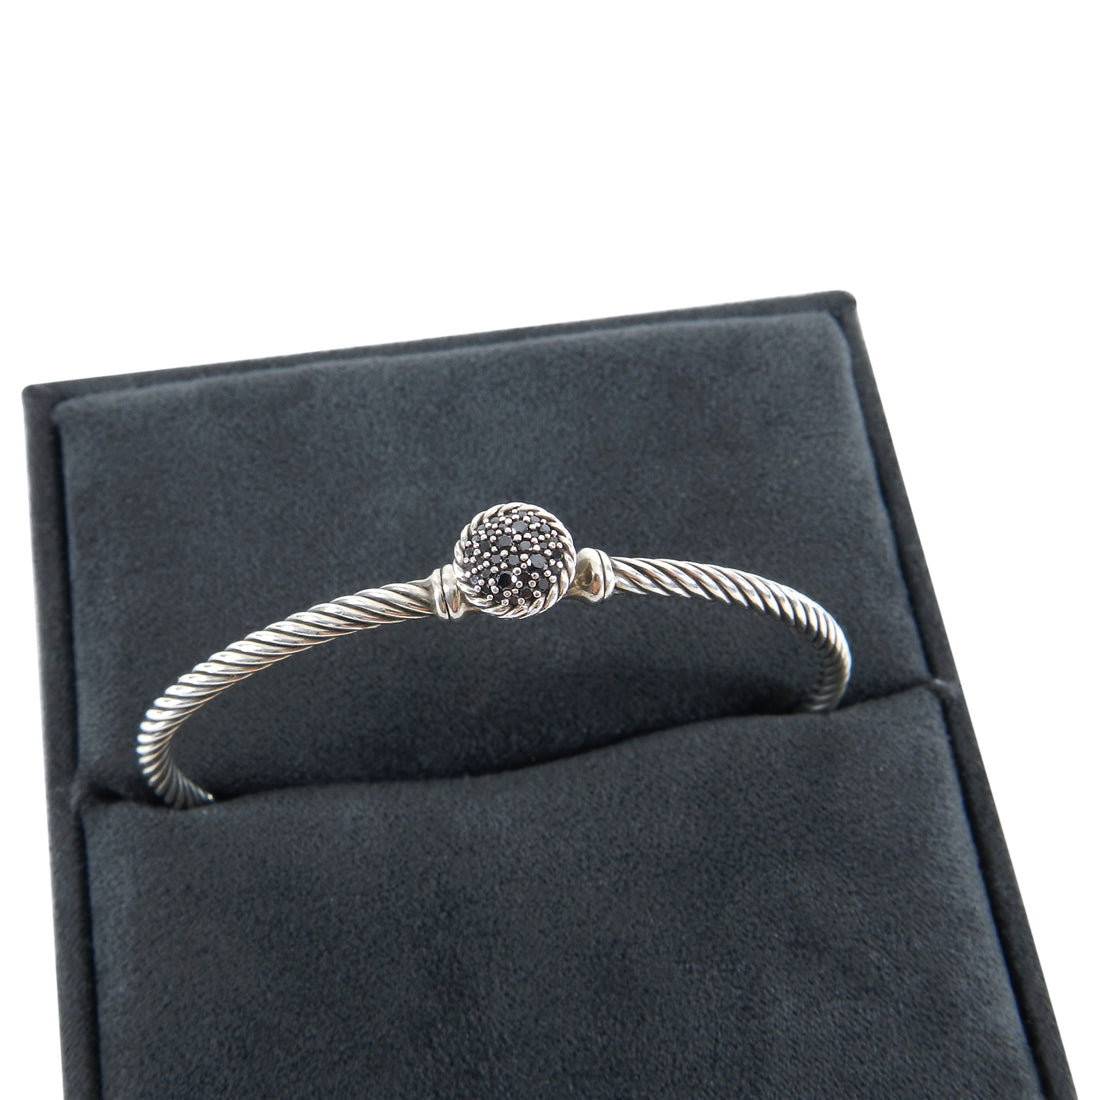 David Yurman 3mm Sterling Cable Bracelet with Black Diamond